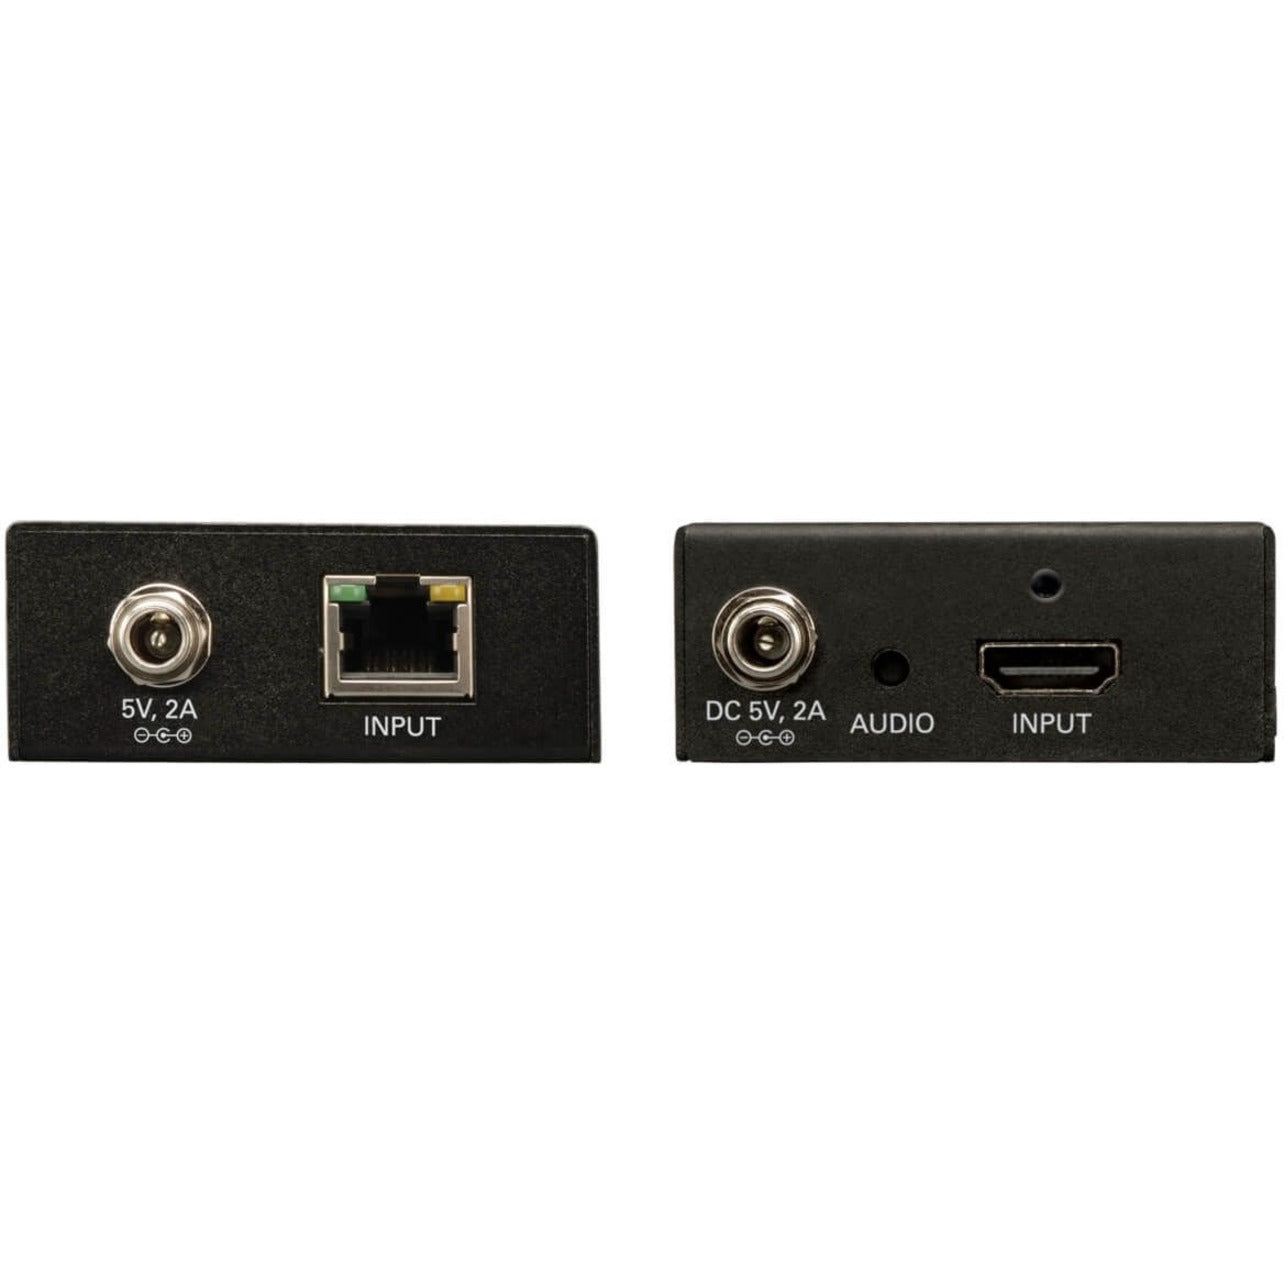 Tripp Lite HDMI/CAT5 Dual Display Kit - Full HD Video Extender Transmitter/Receiver (B126-2A1)